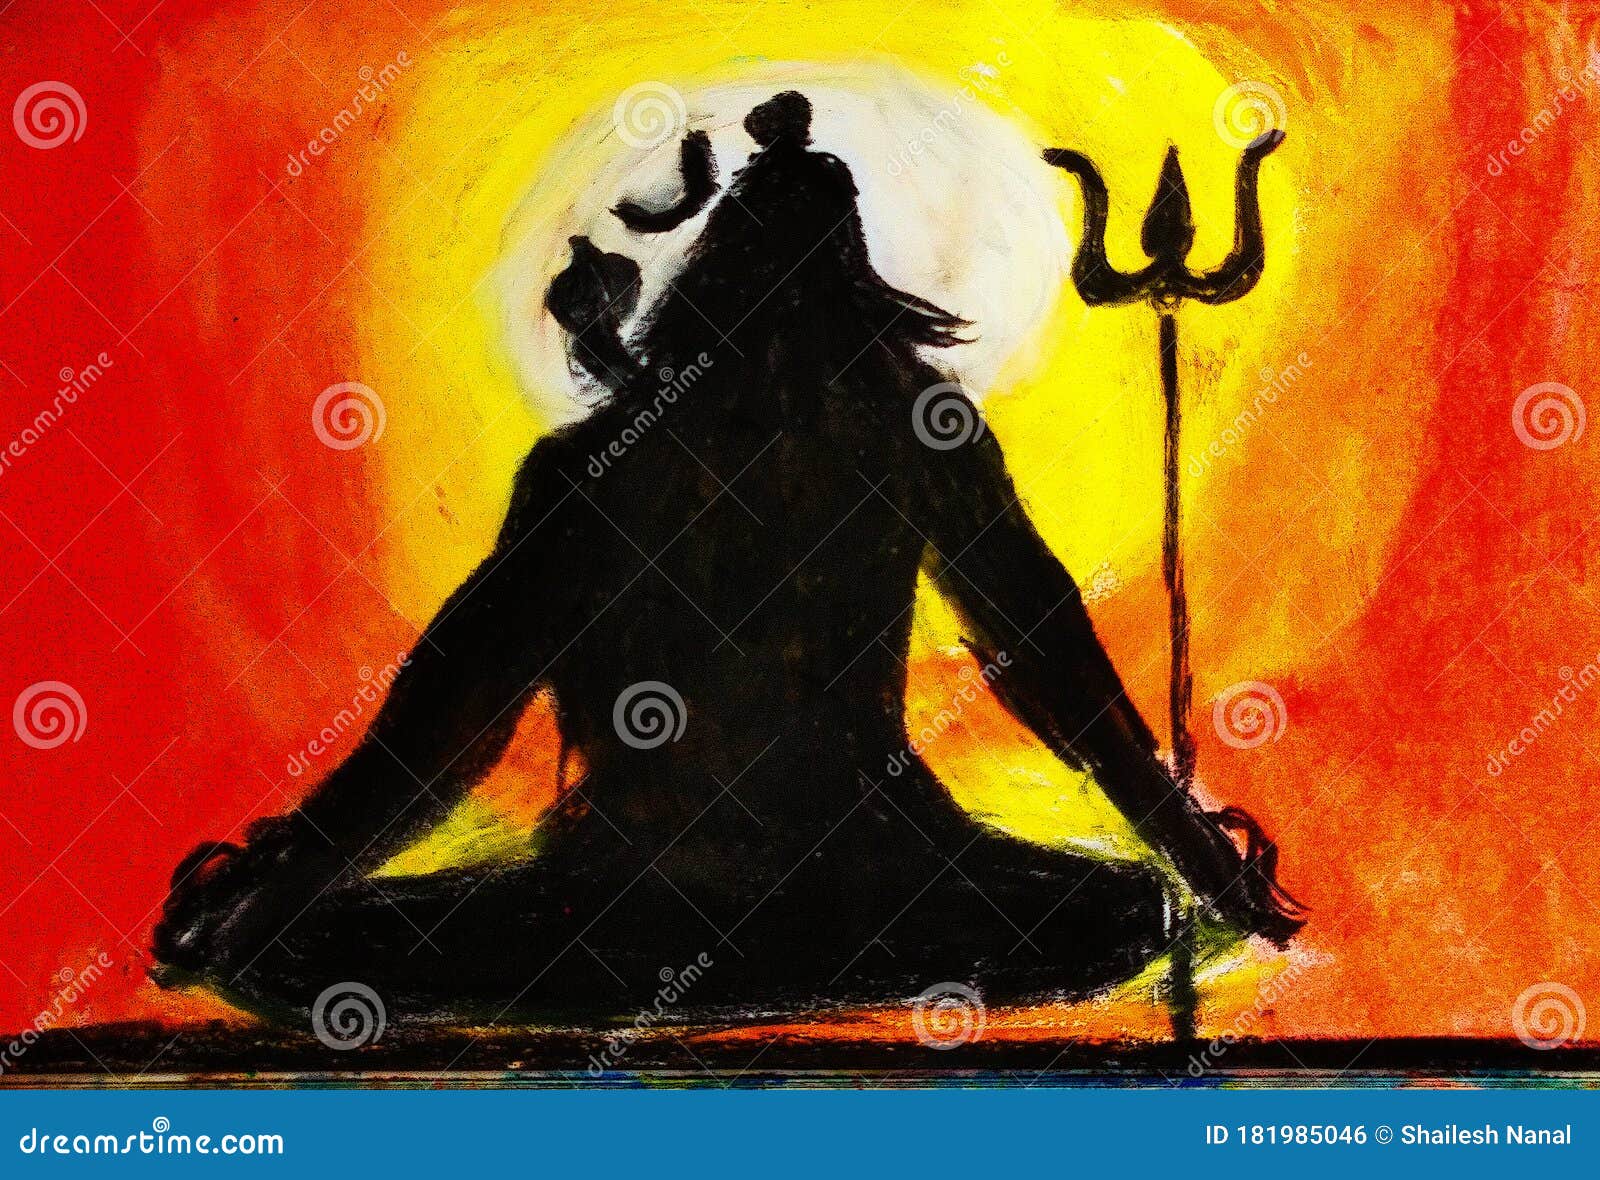 Why Lord Shiva is the ultimate Yogi - ASEEMA